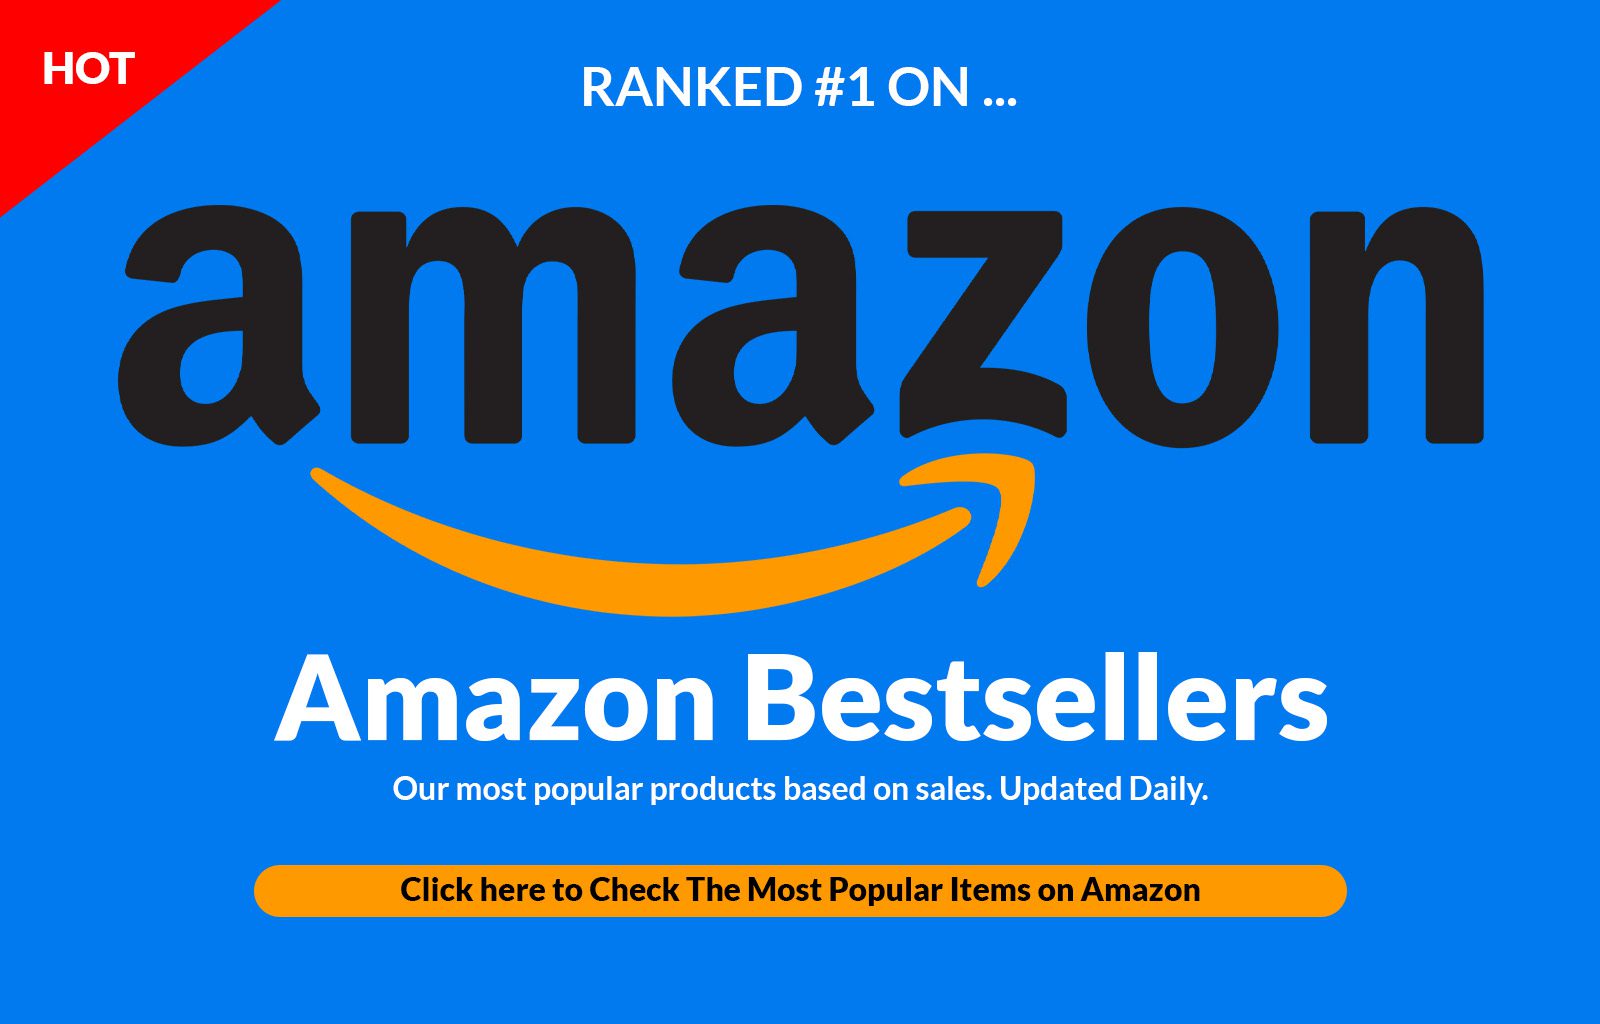 Amazon Bestsellers - Kilka Insights